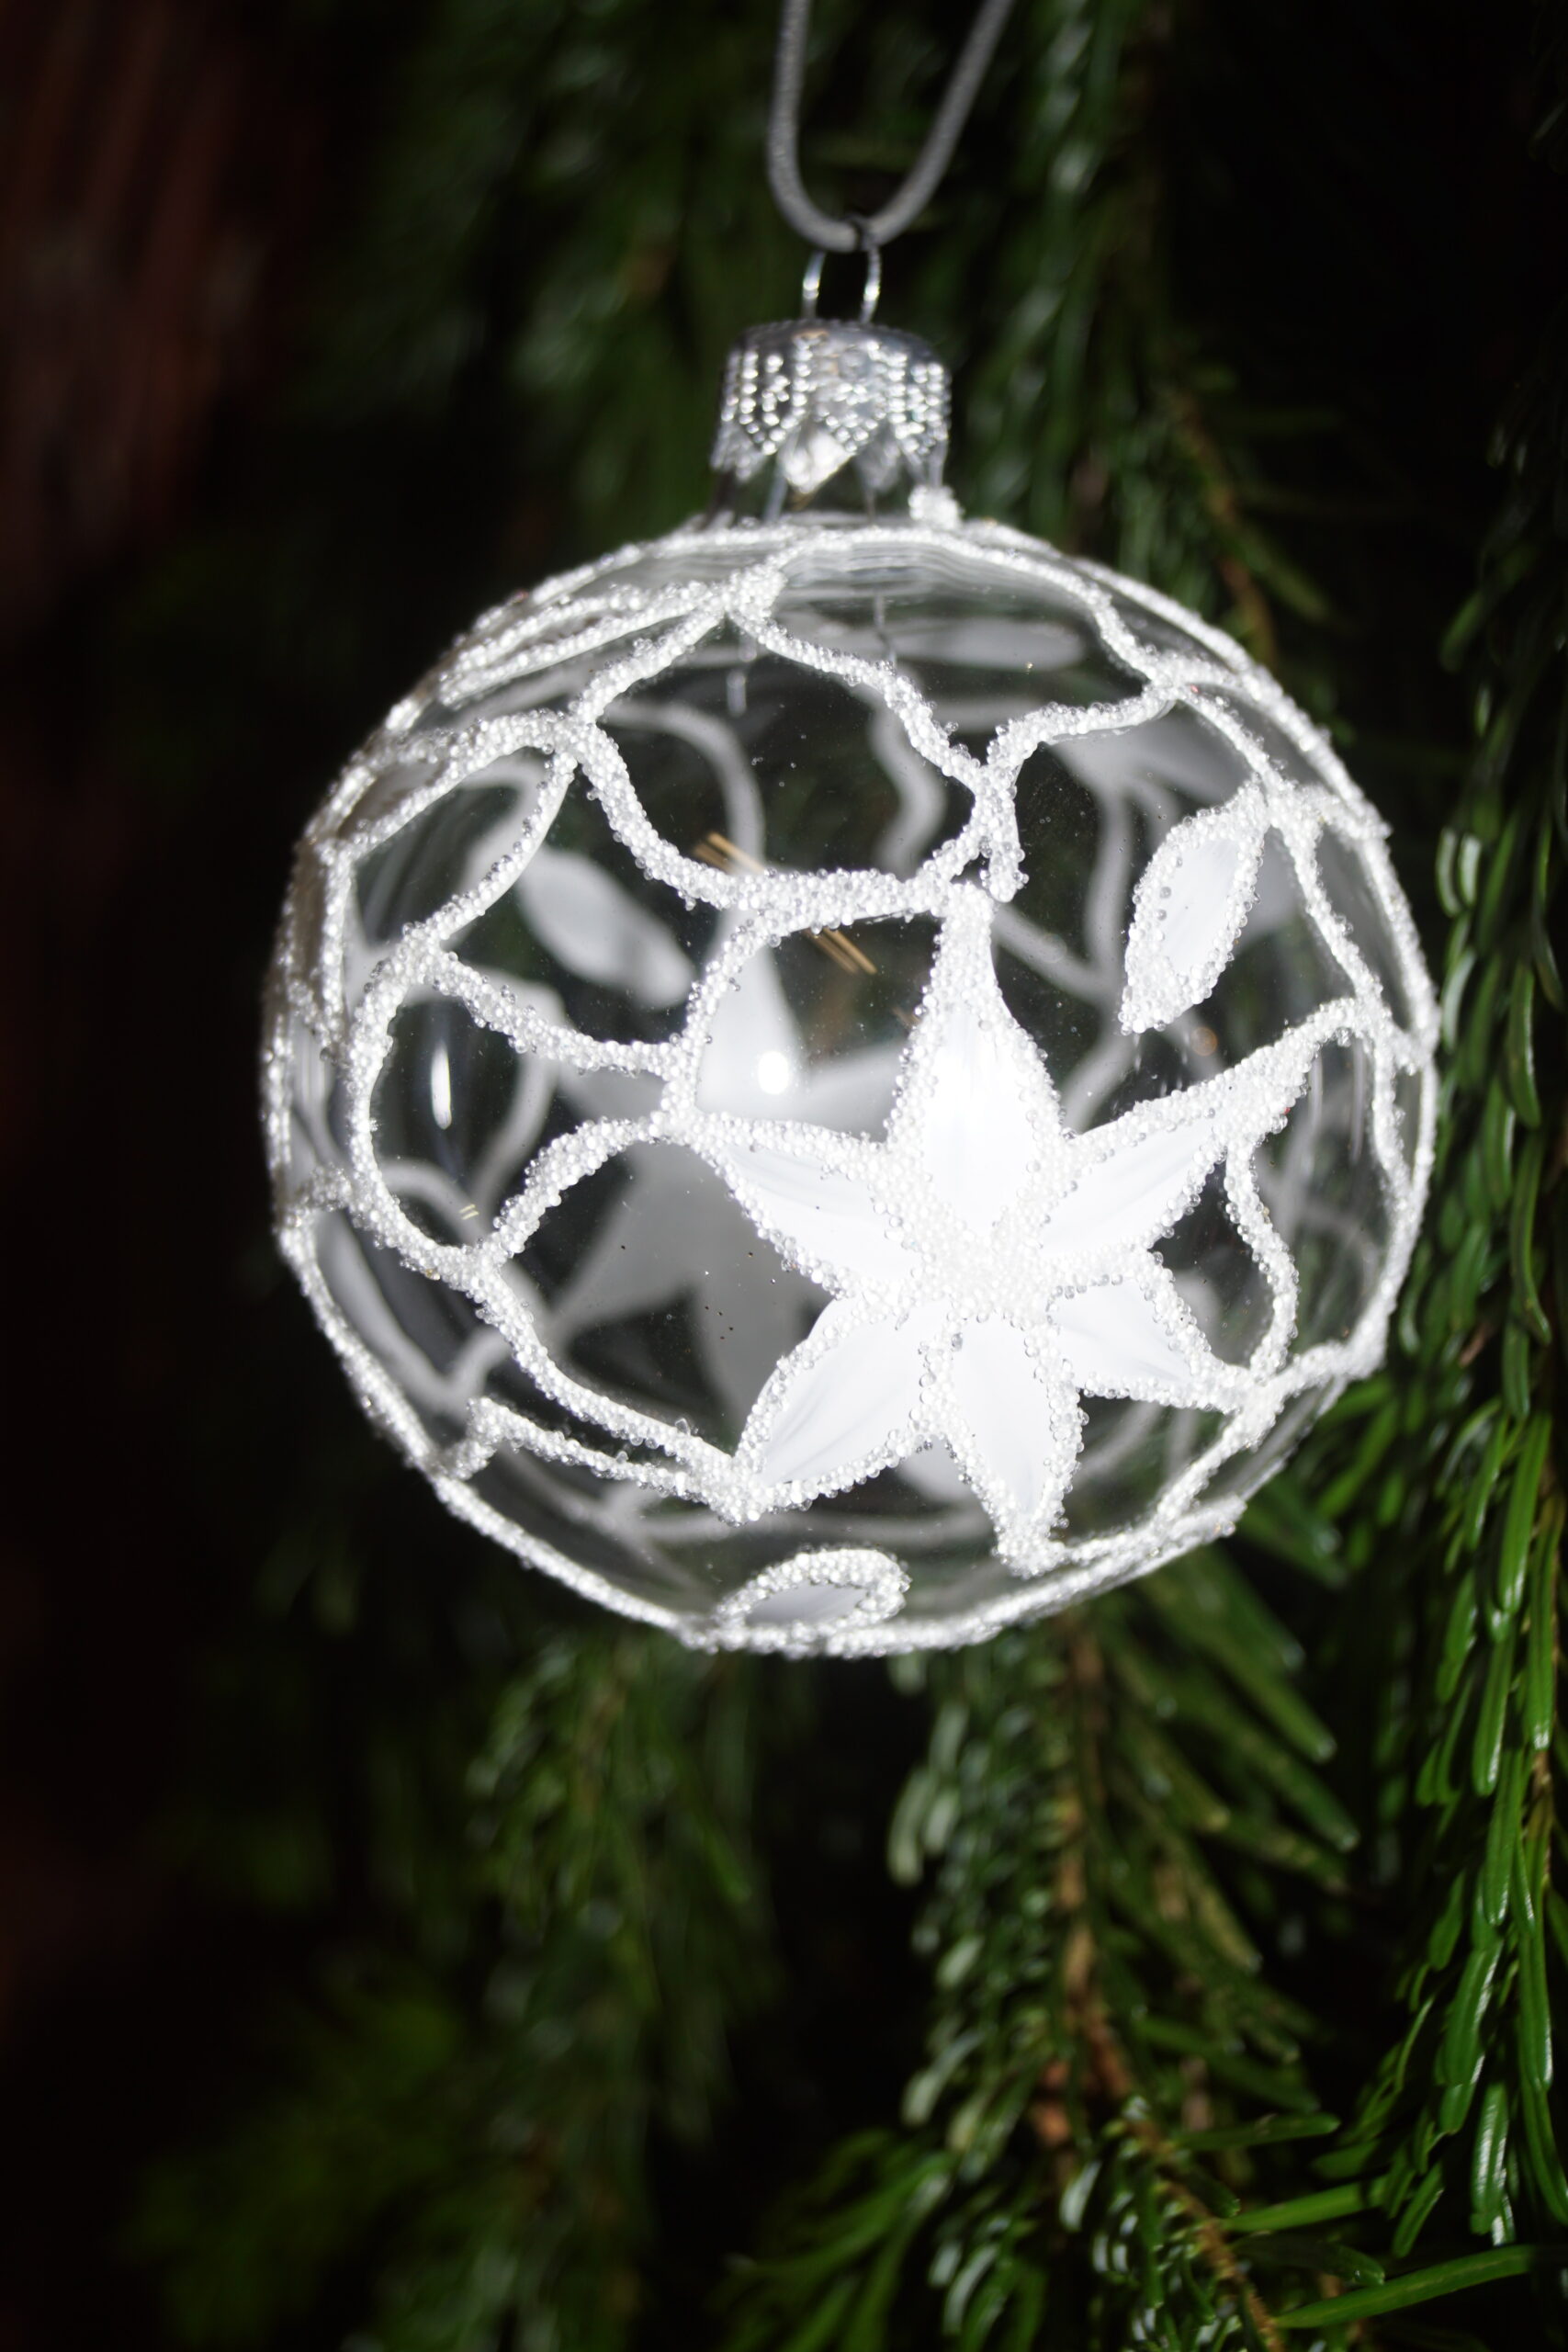 Julekugle 8 cm, klar glas dekoreret med sne ornament